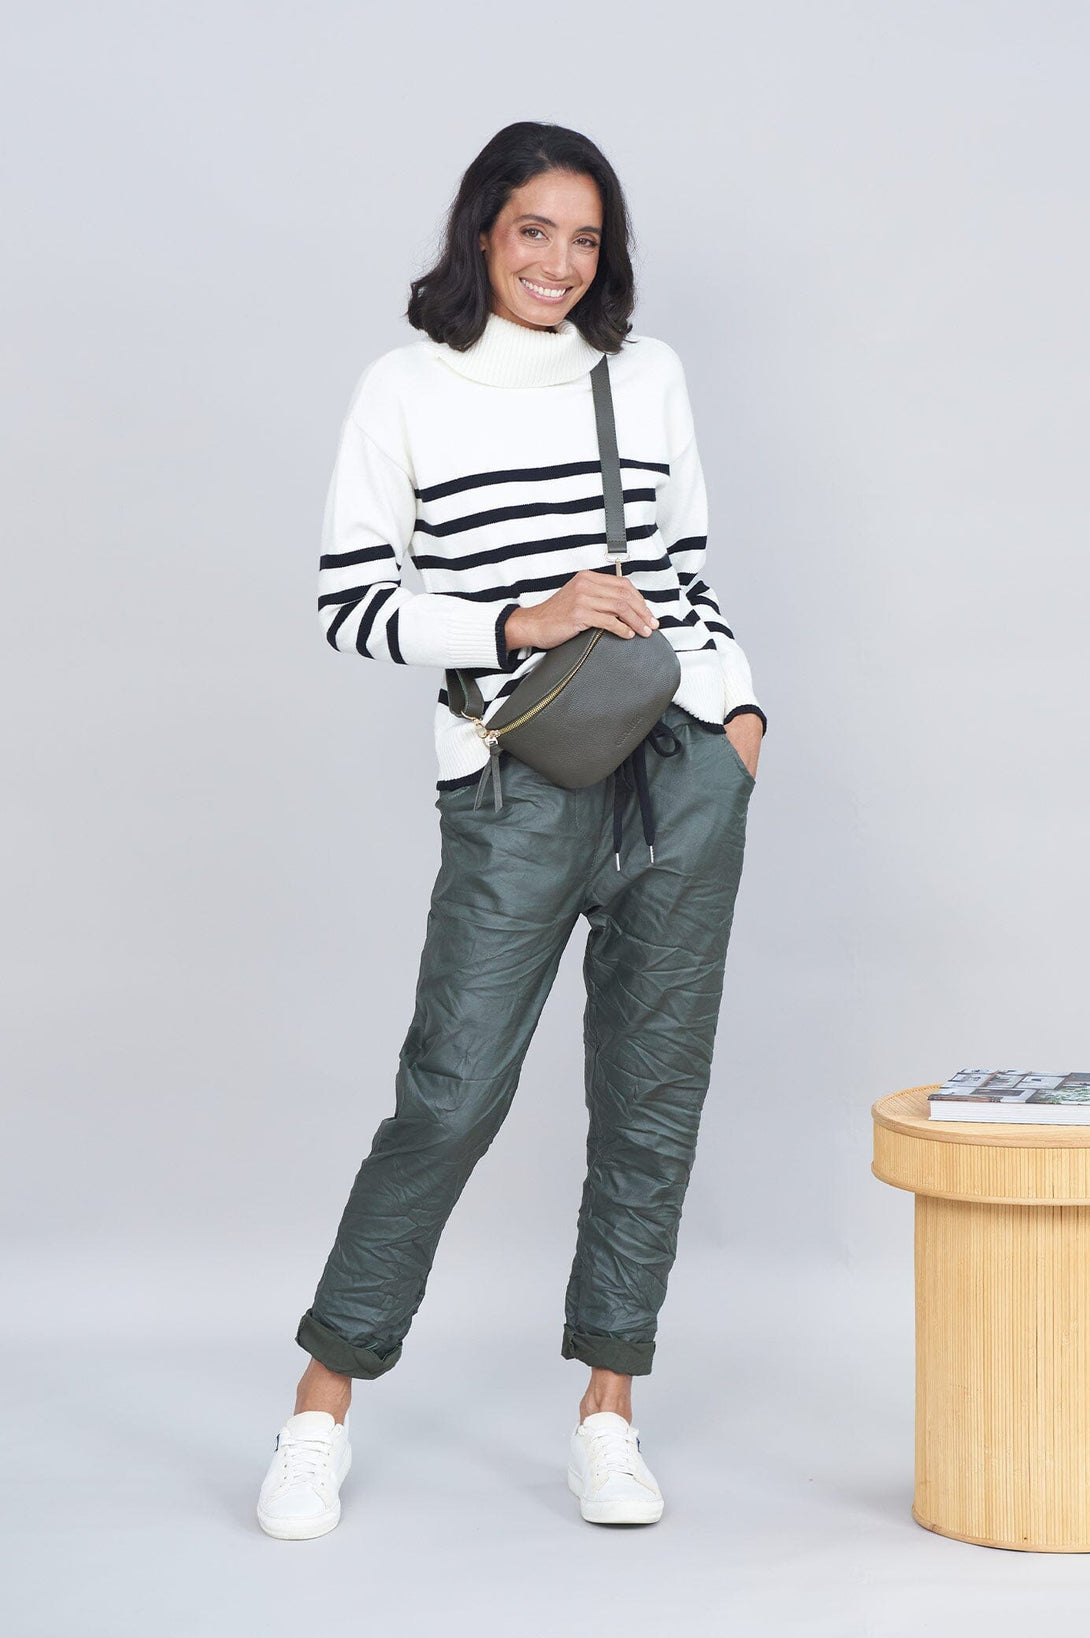 Tamara Striped Jumper Ivory & Black- Pre Order Knitwear